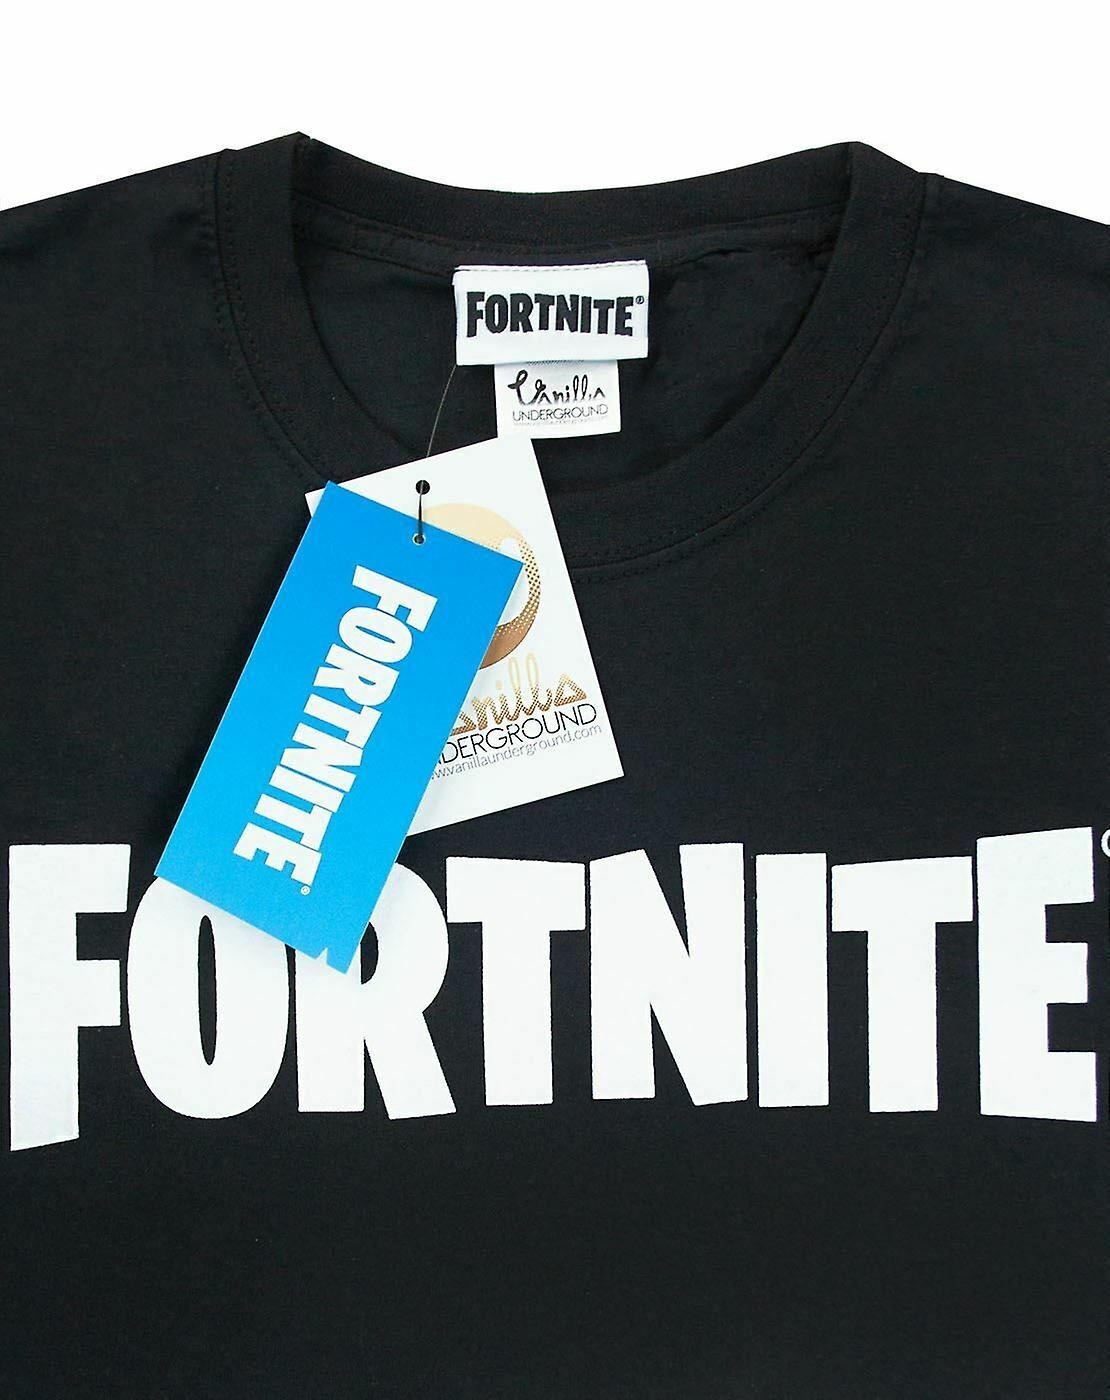 T-shirt fornite logo